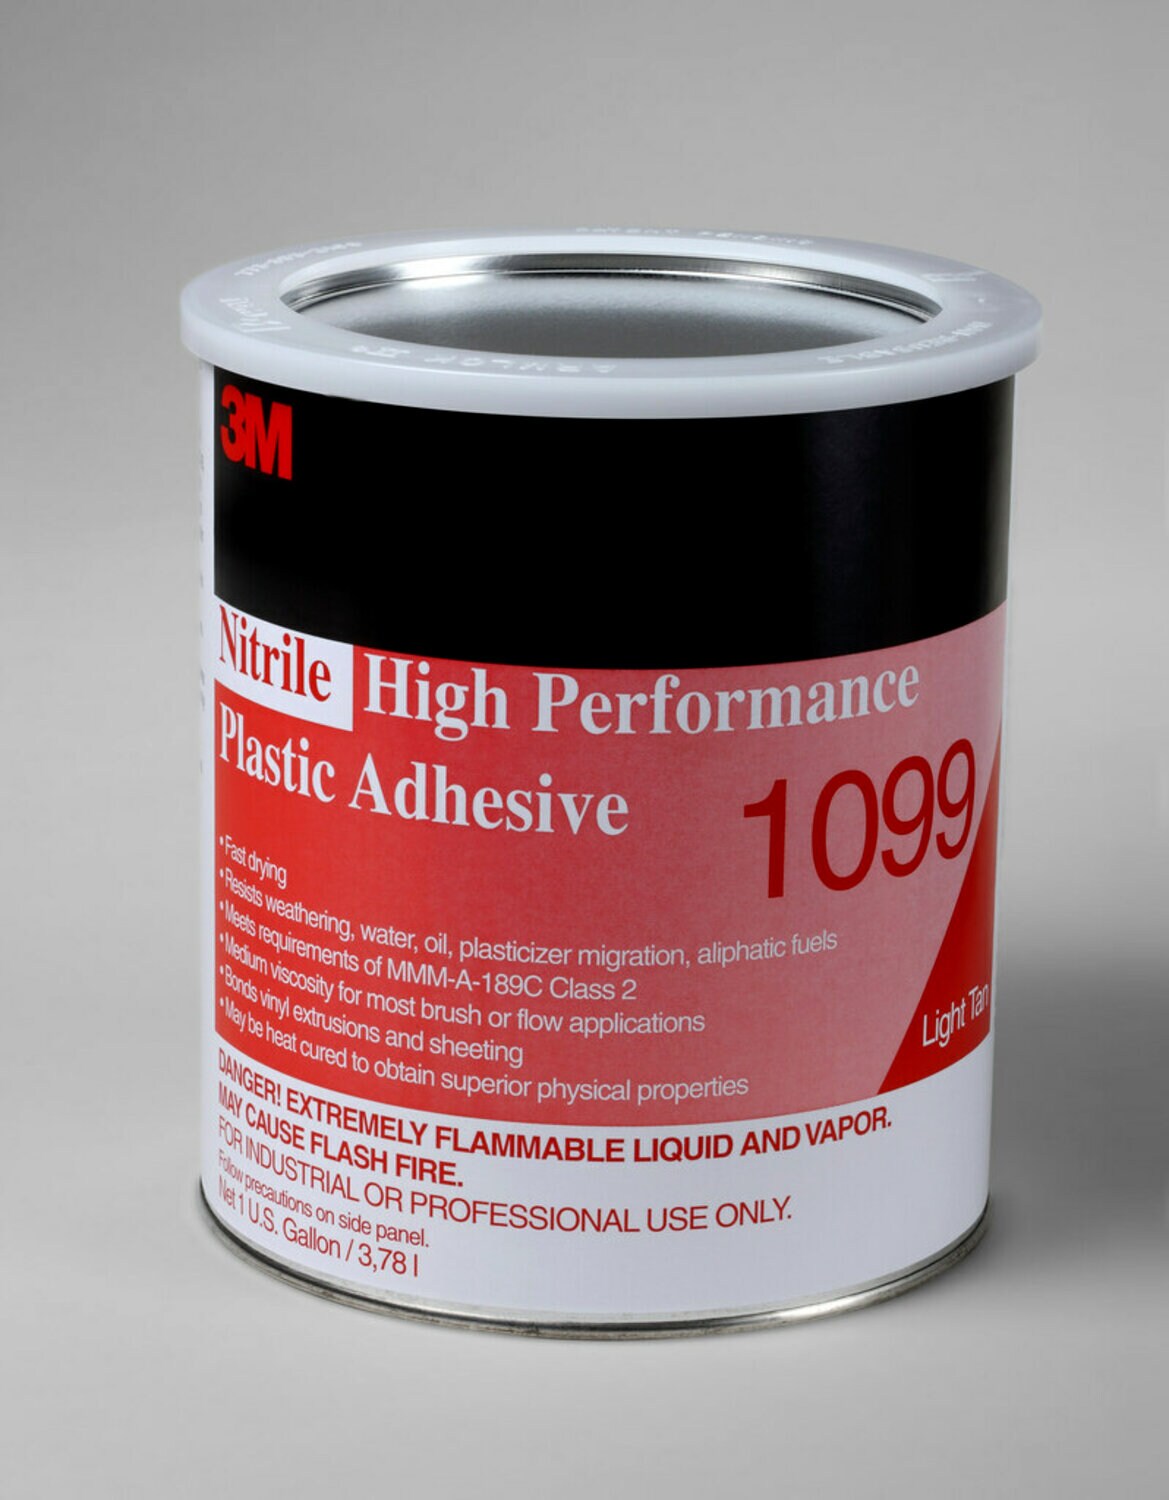 7000121198 - 3M Nitrile High Performance Plastic Adhesive 1099, Tan, 1 Gallon, 4
Can/Case